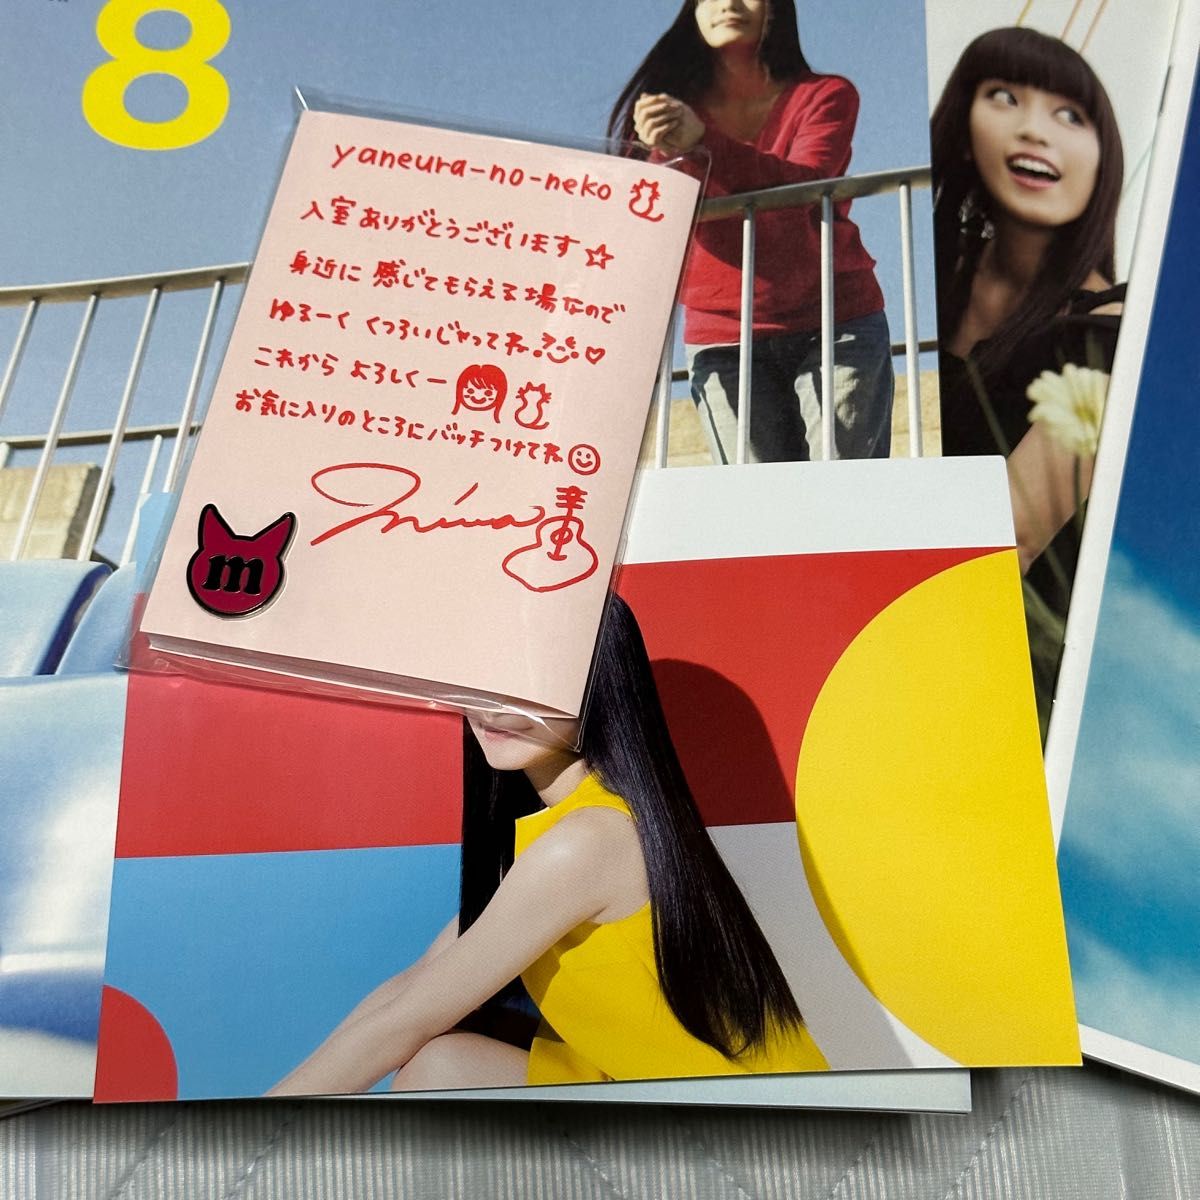 miwa ファンクラブ会報誌 Vol.8〜46(Vol.12を除く) バッジ付き yaneura-no-neko 